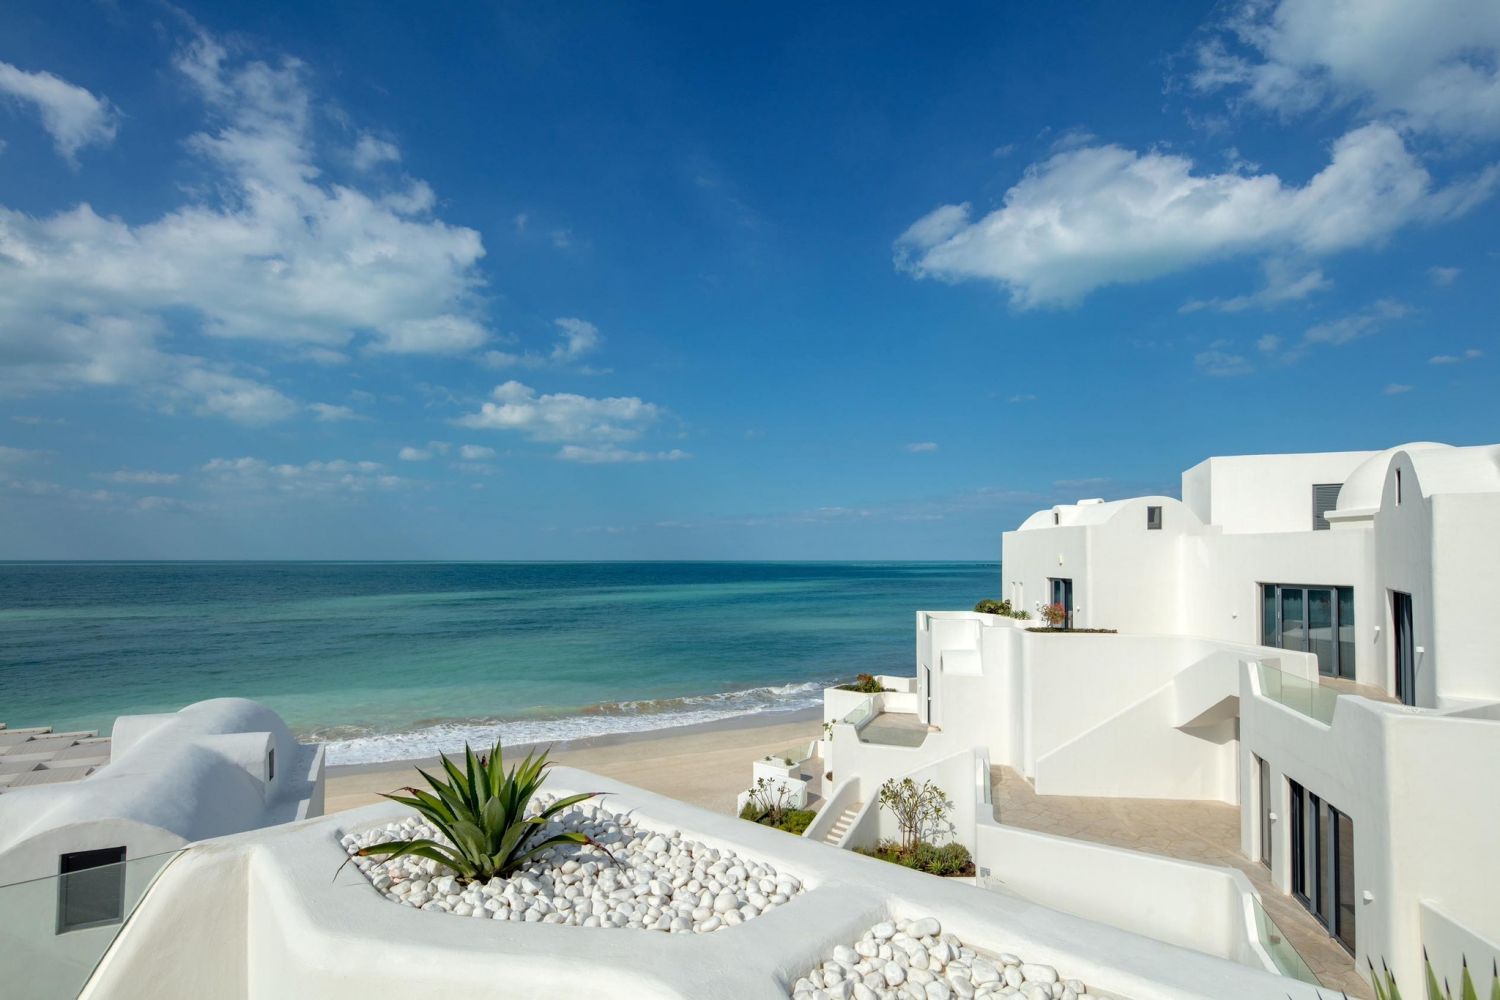 New retreat in UAE giving a sense of Santorini in Greece